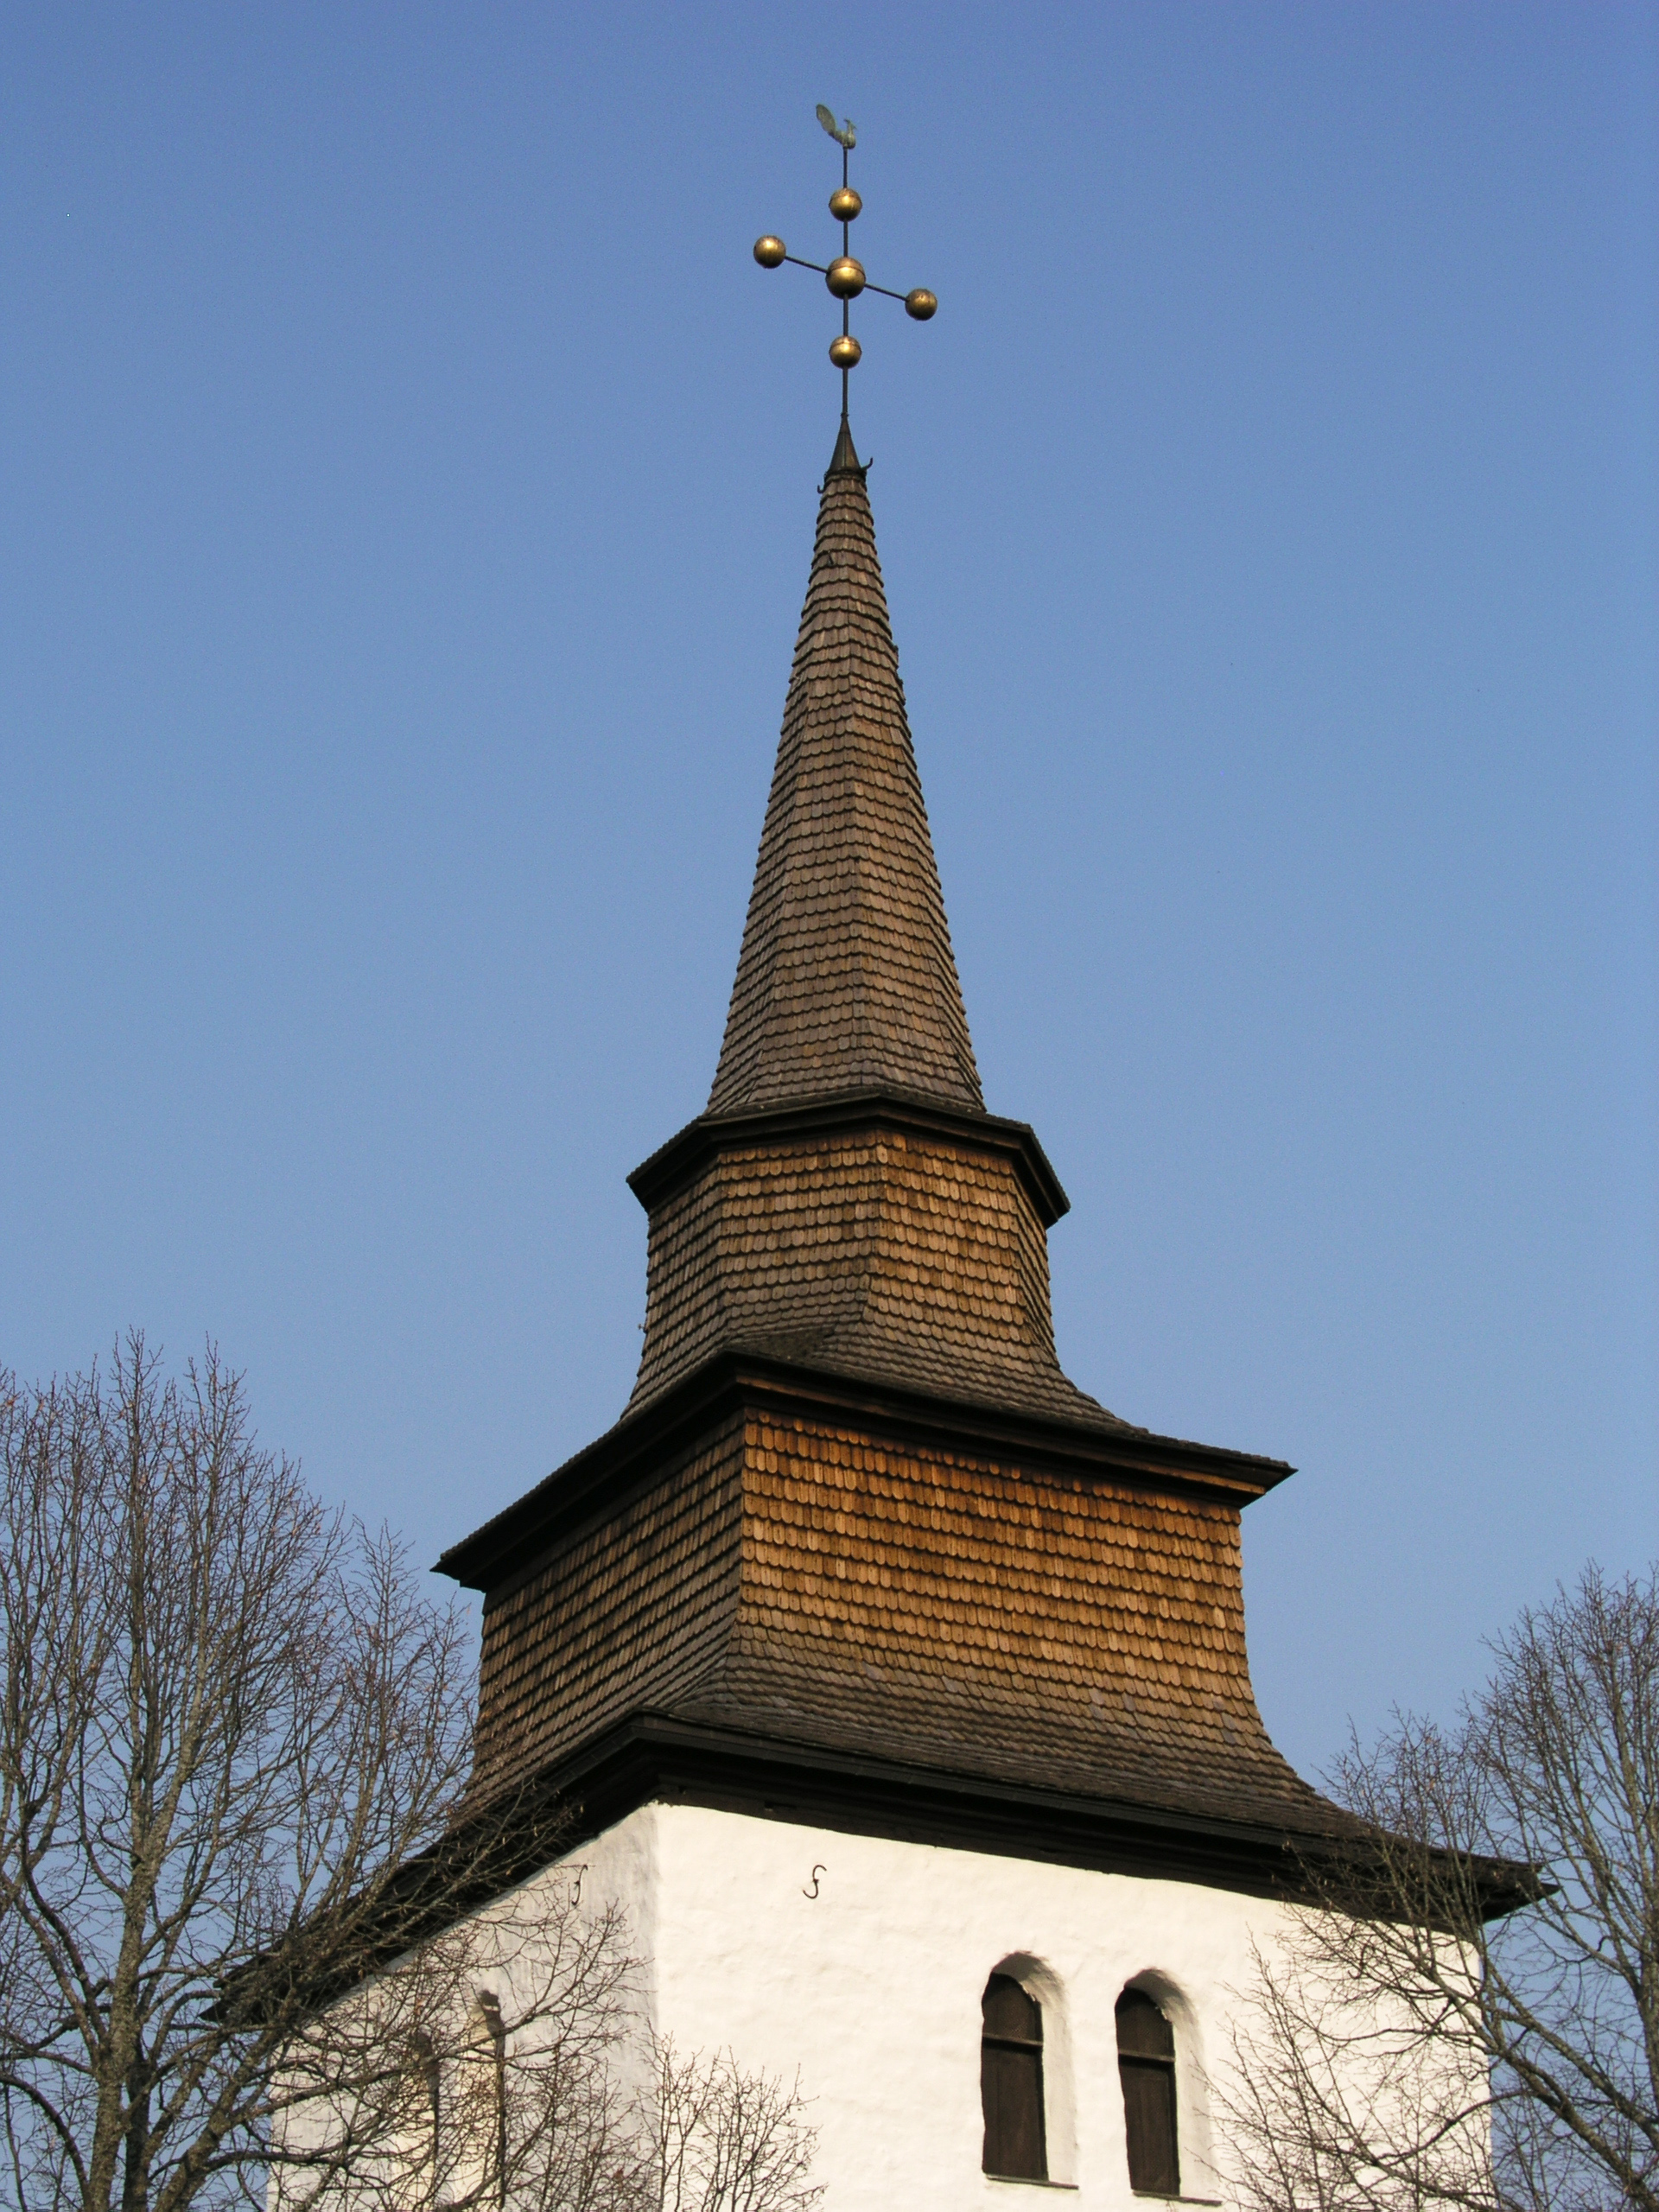 Alga_kyrka_church_steeple.jpg